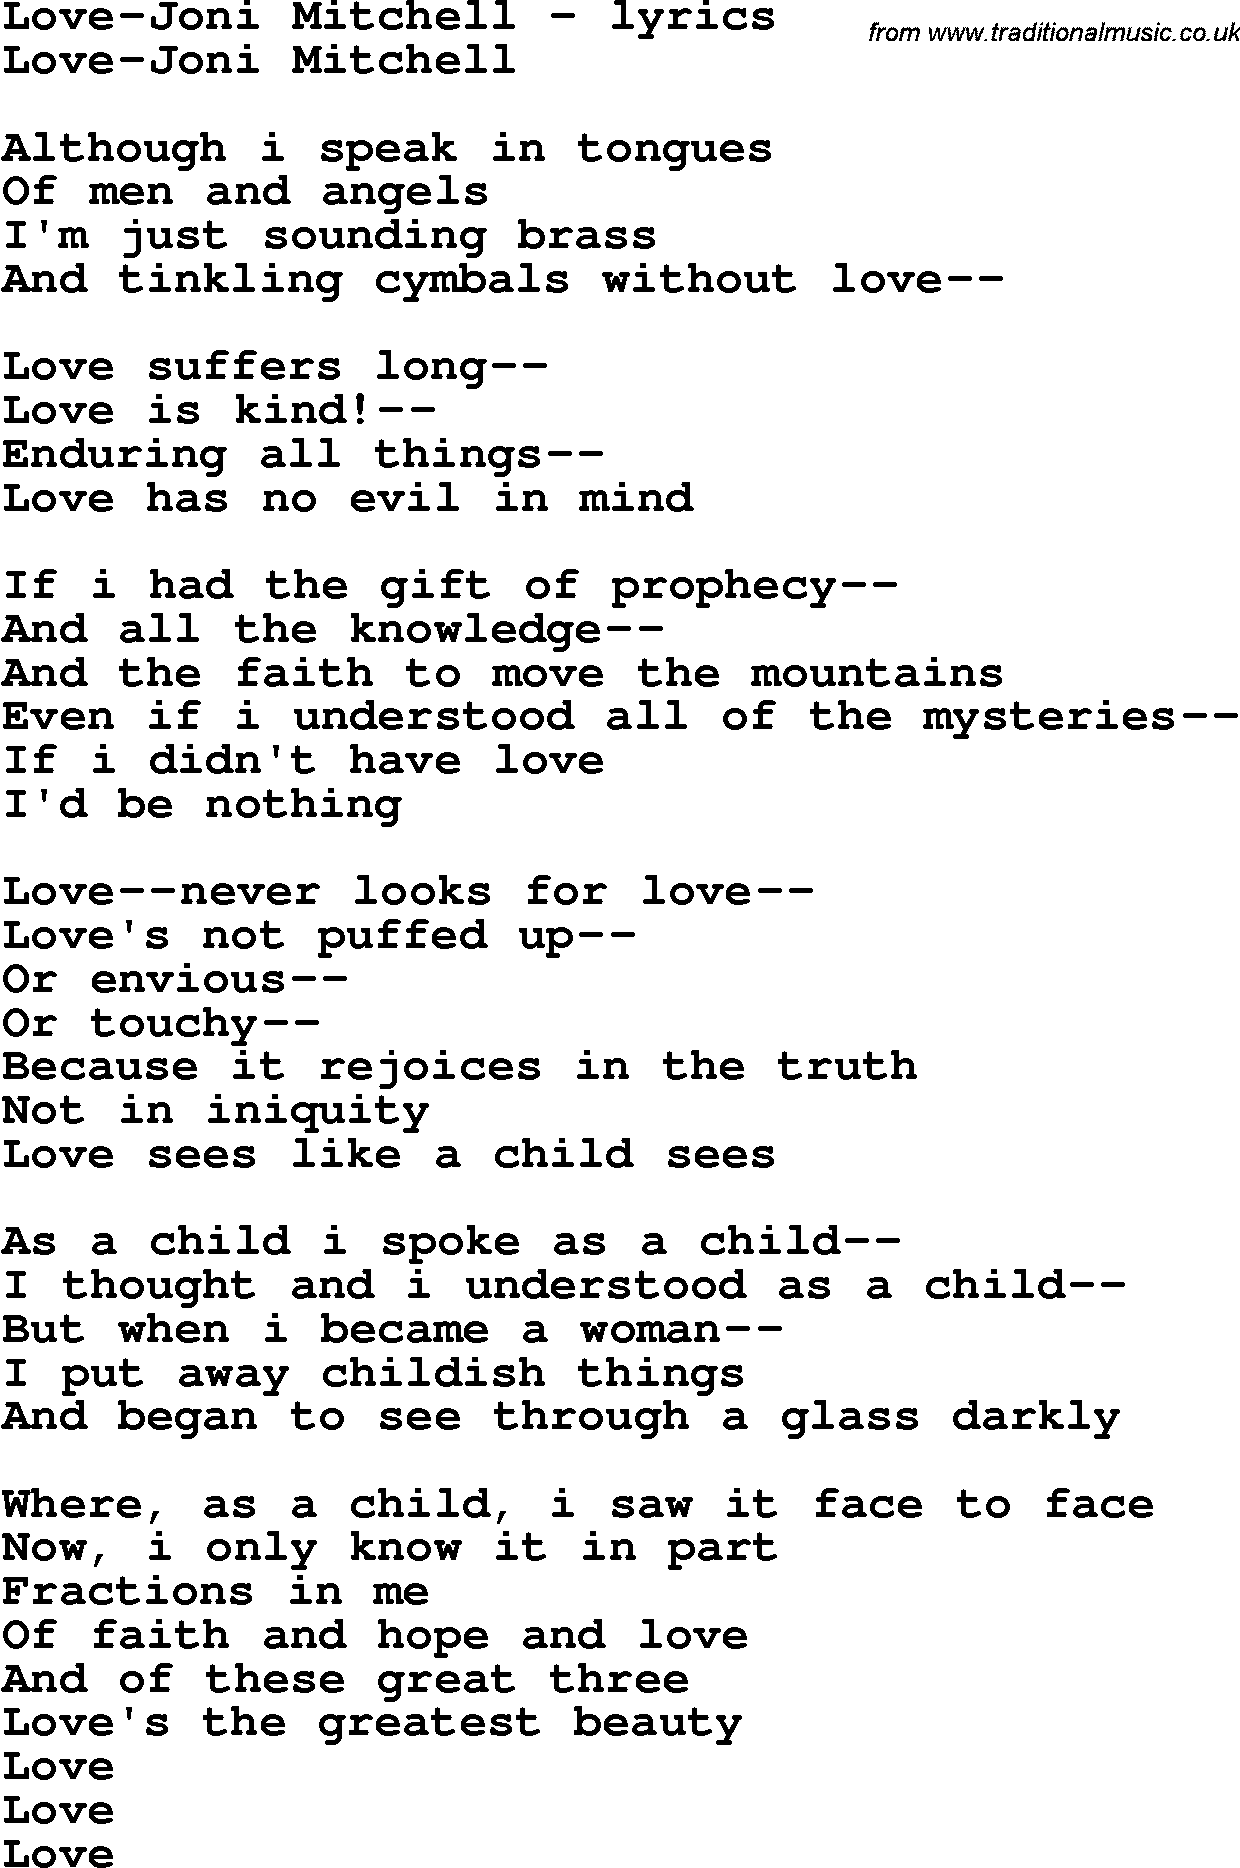 Love Song Lyrics for: Love-Joni Mitchell